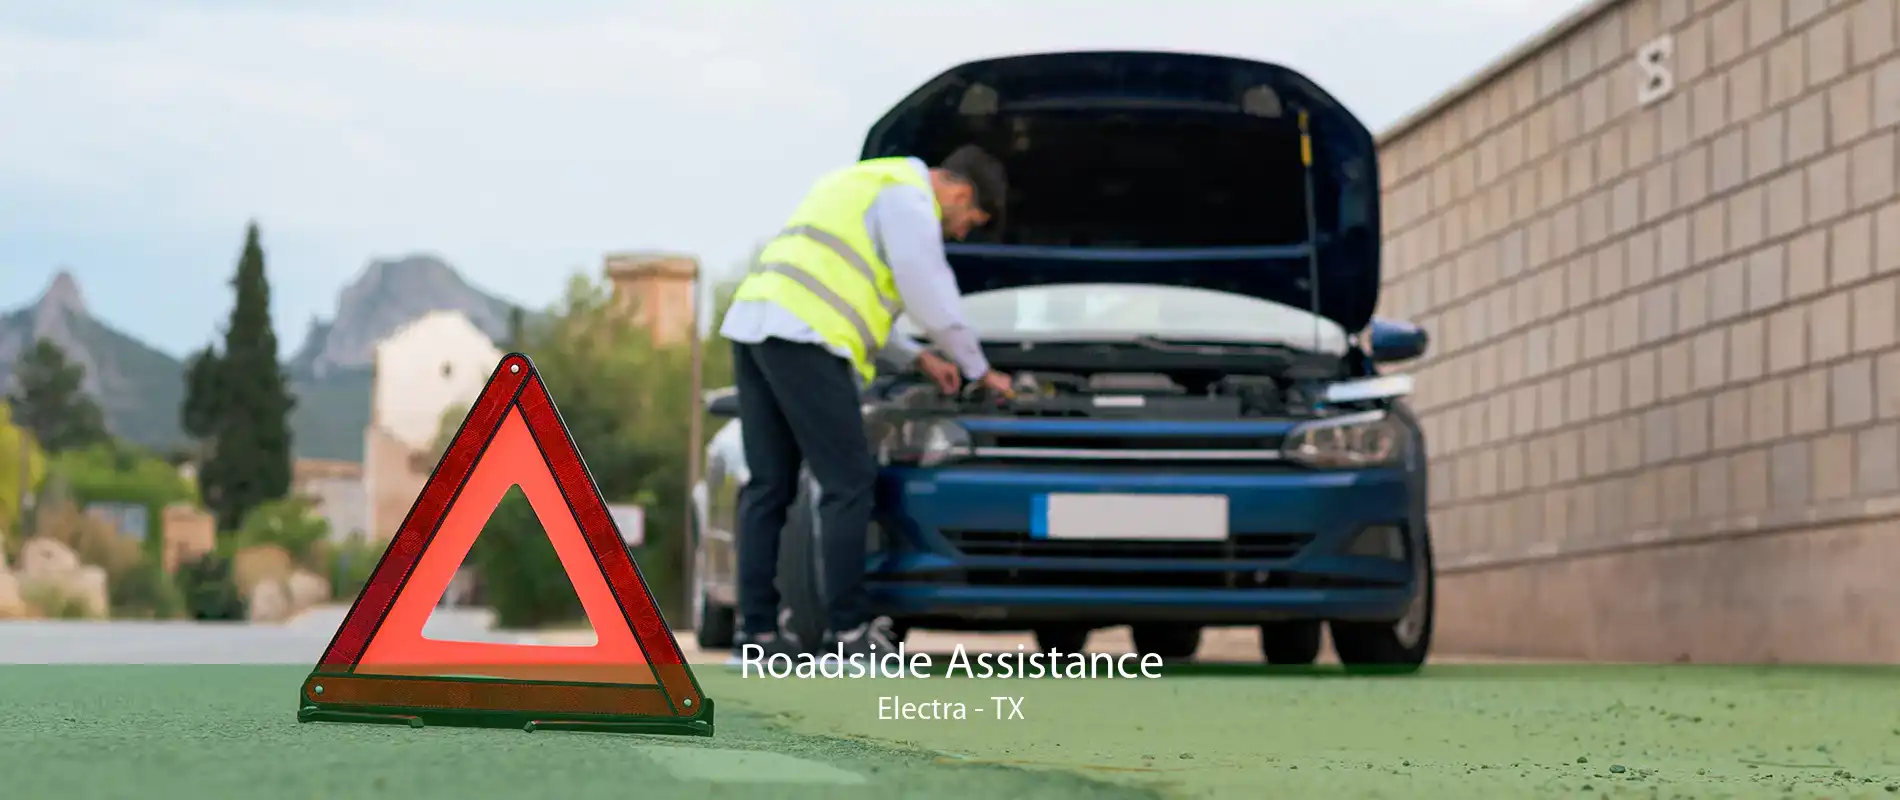 Roadside Assistance Electra - TX